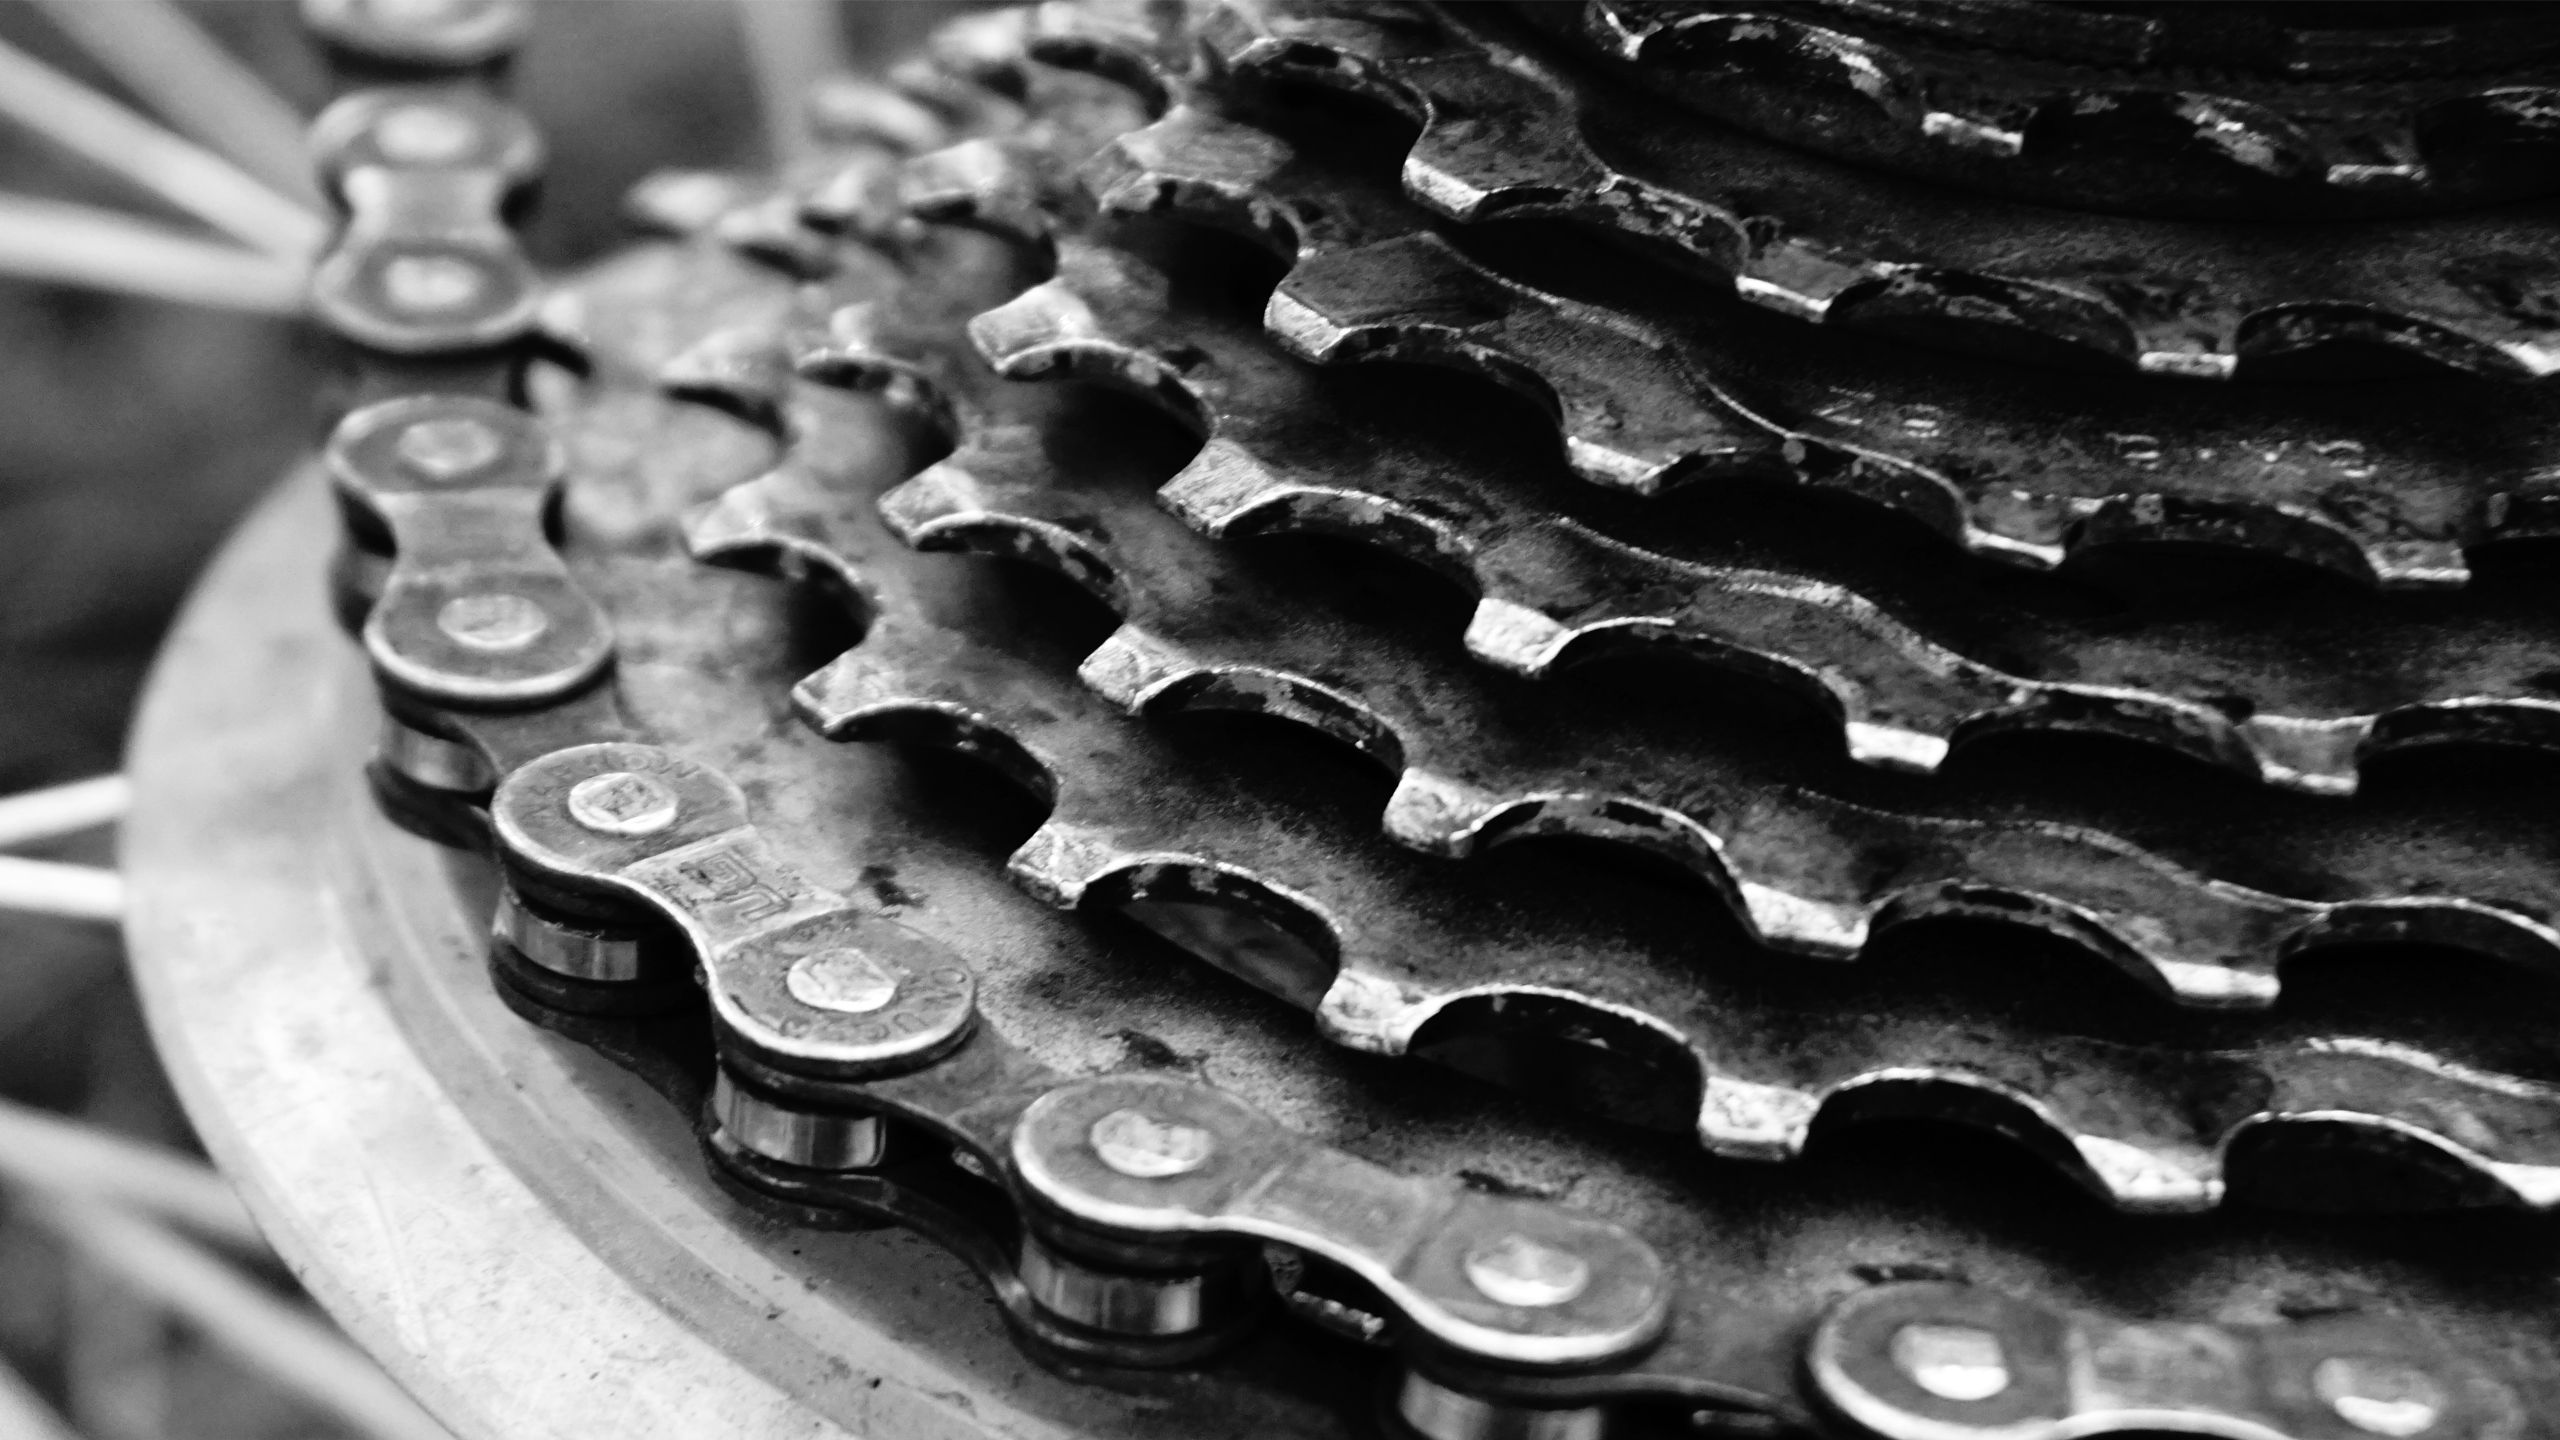 Bike gears and chains.